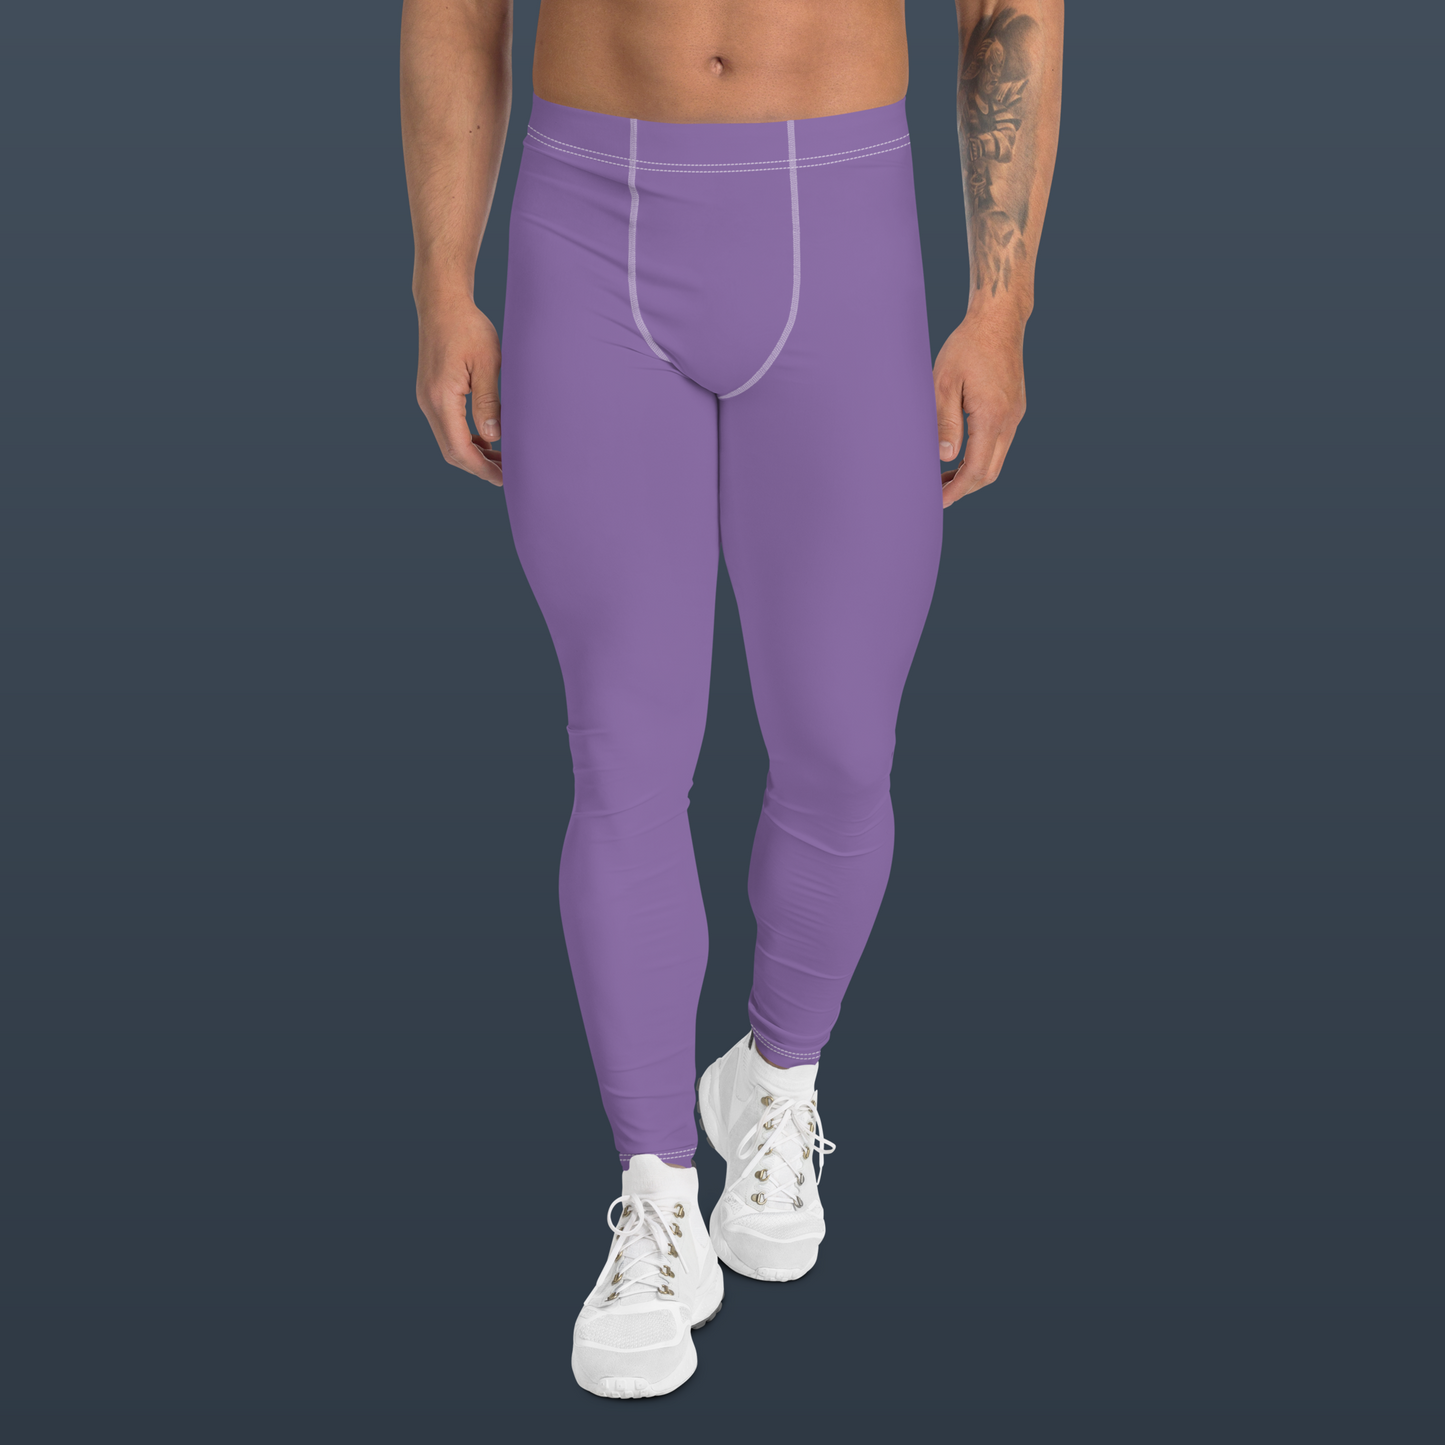 Men's Athletic Leggings (Lavender)